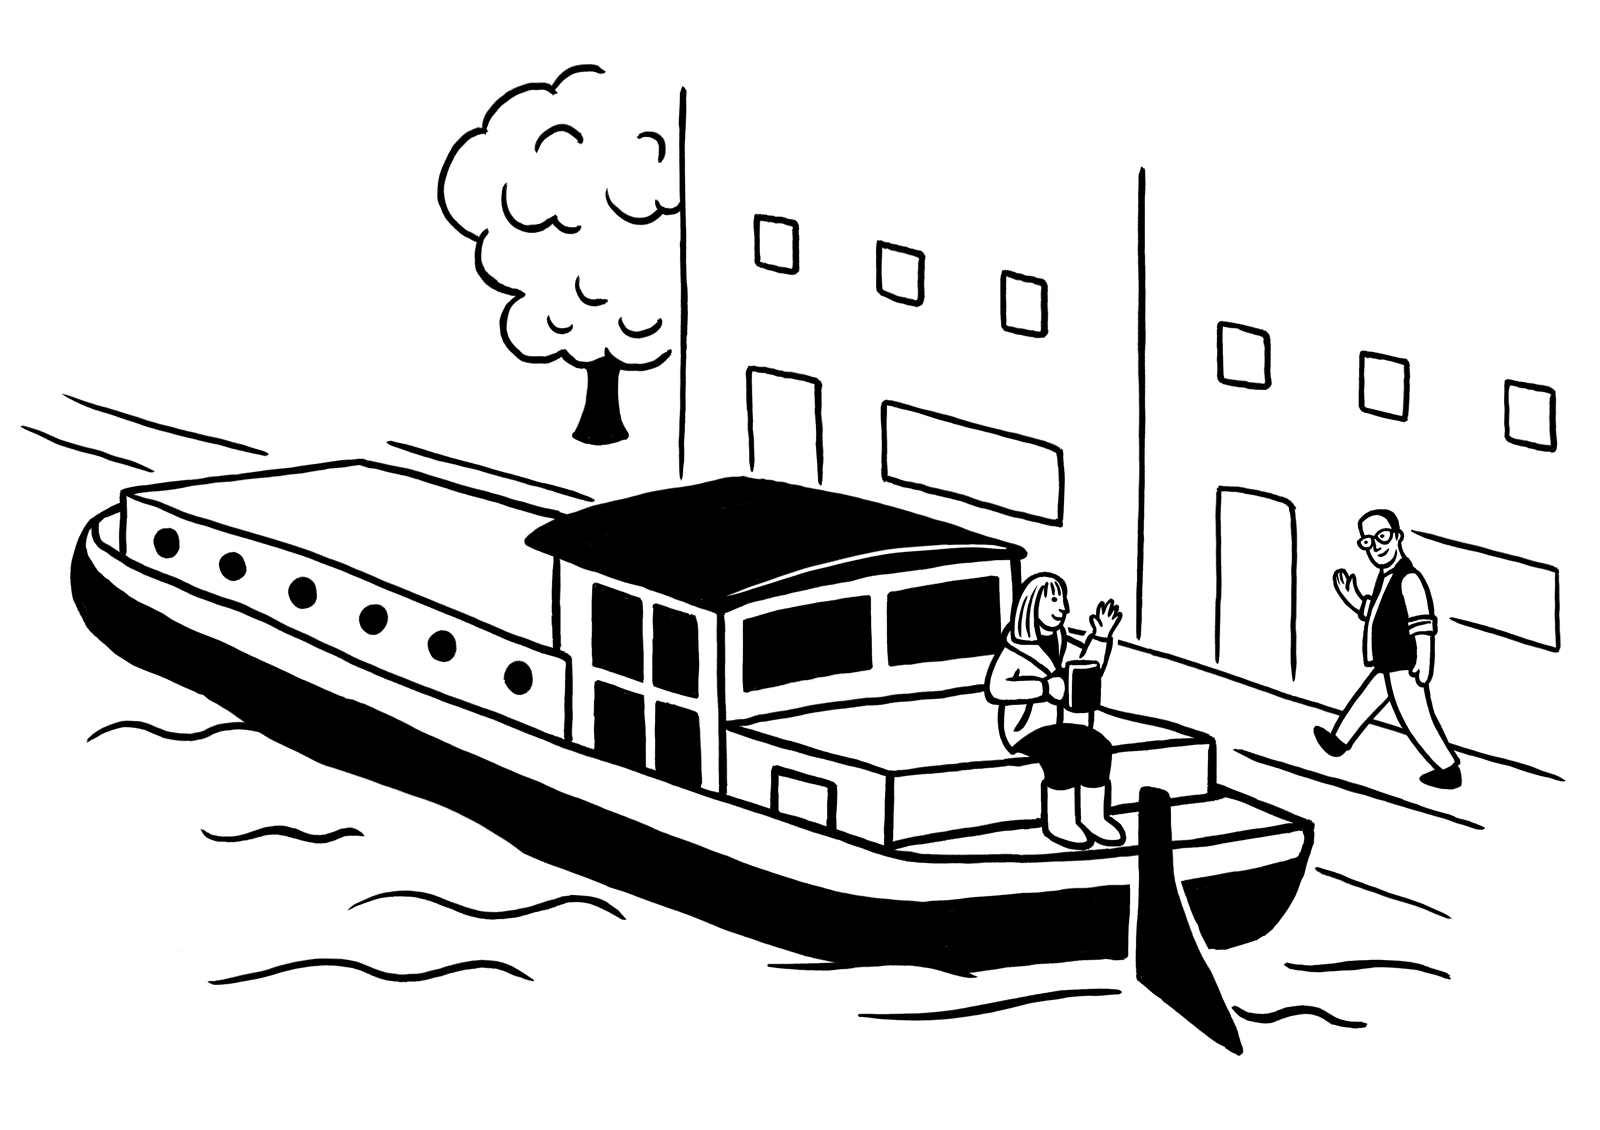 Barge Insurance